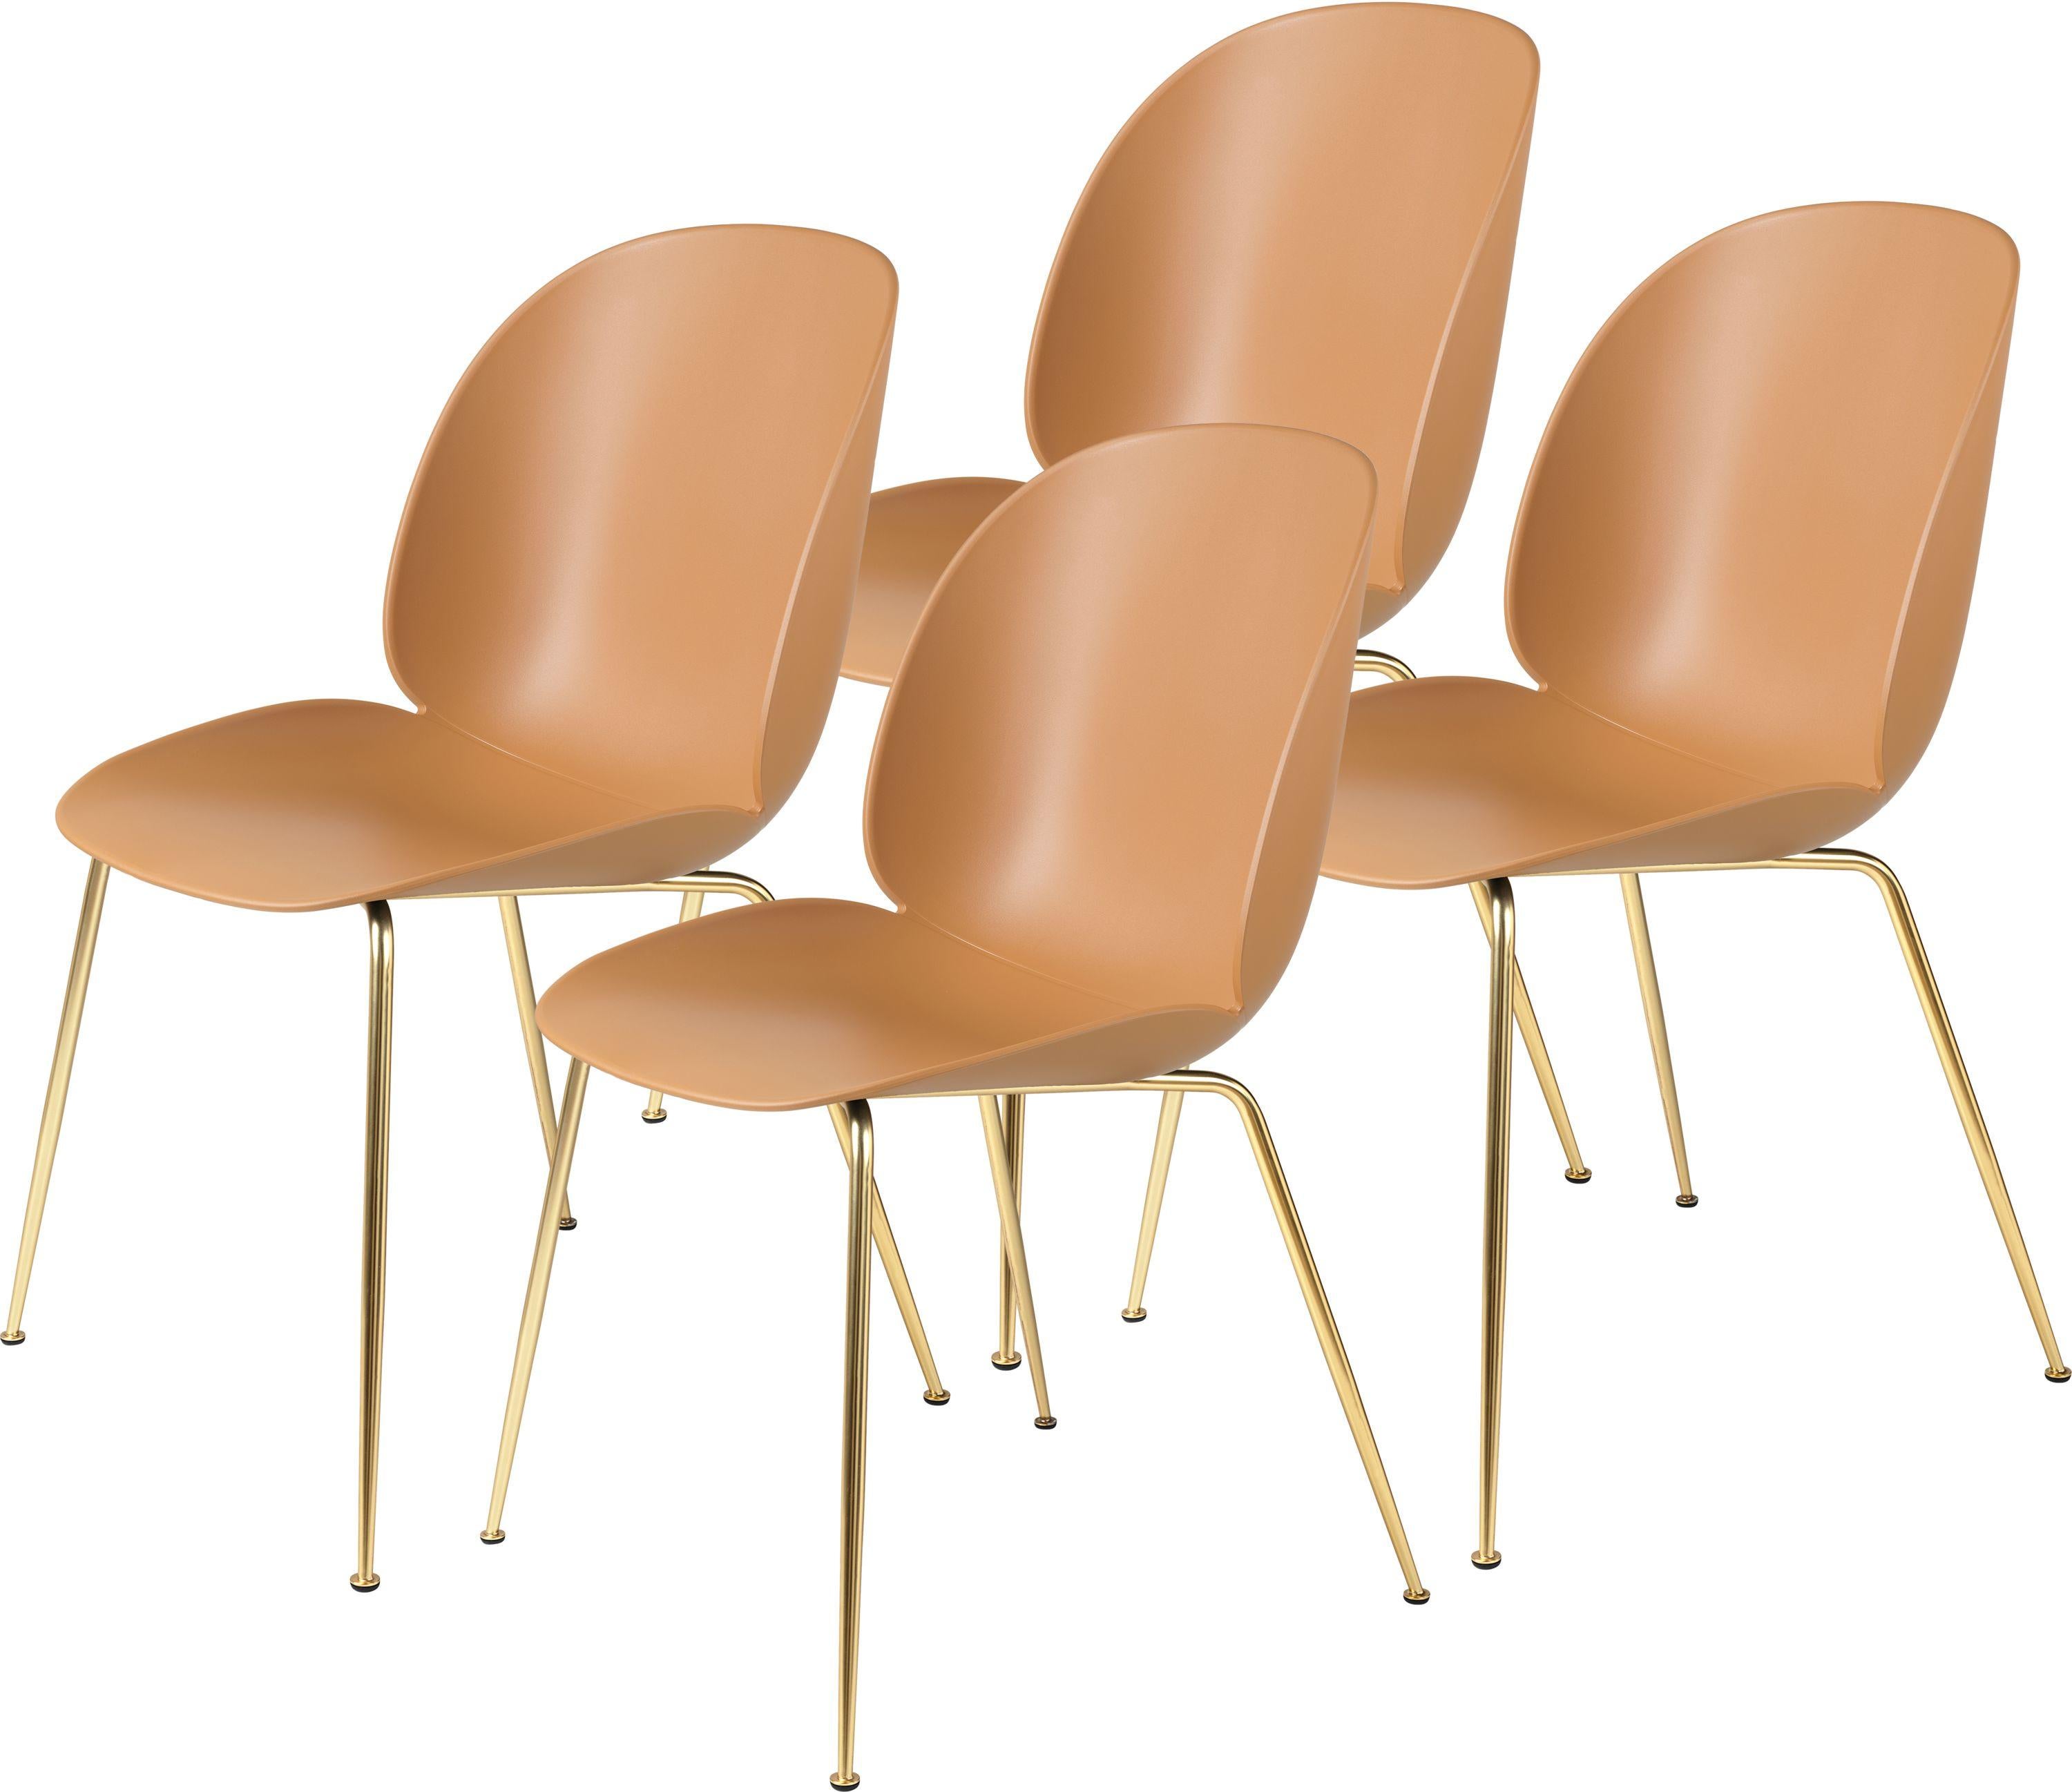 Steel GamFratesi 'Beetle' Dining Chair with Brass Conic Base